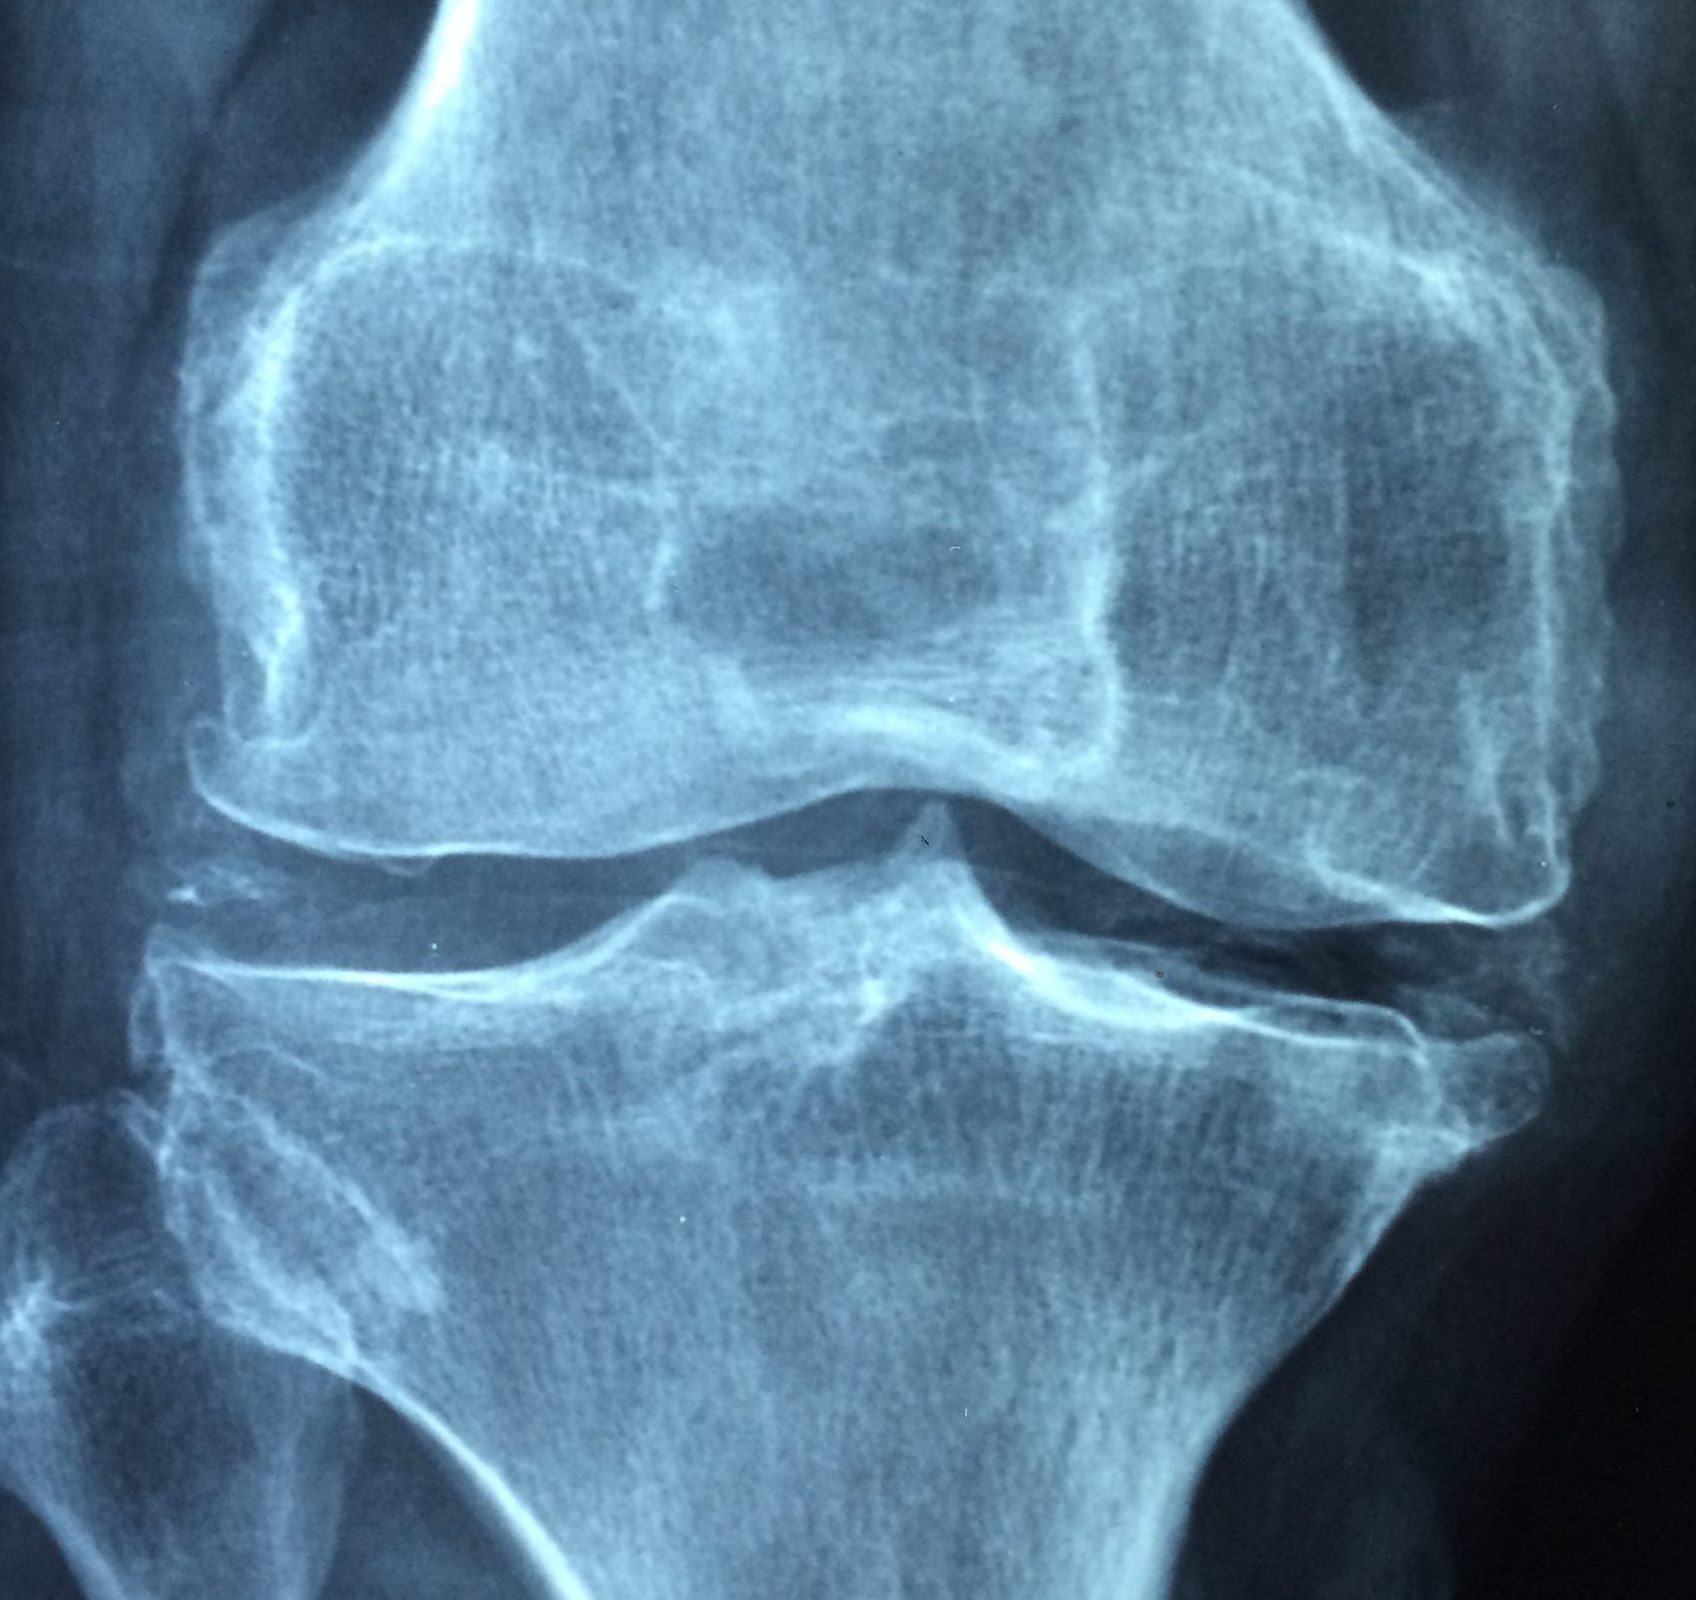 Immagine relativa all'osteoporosi